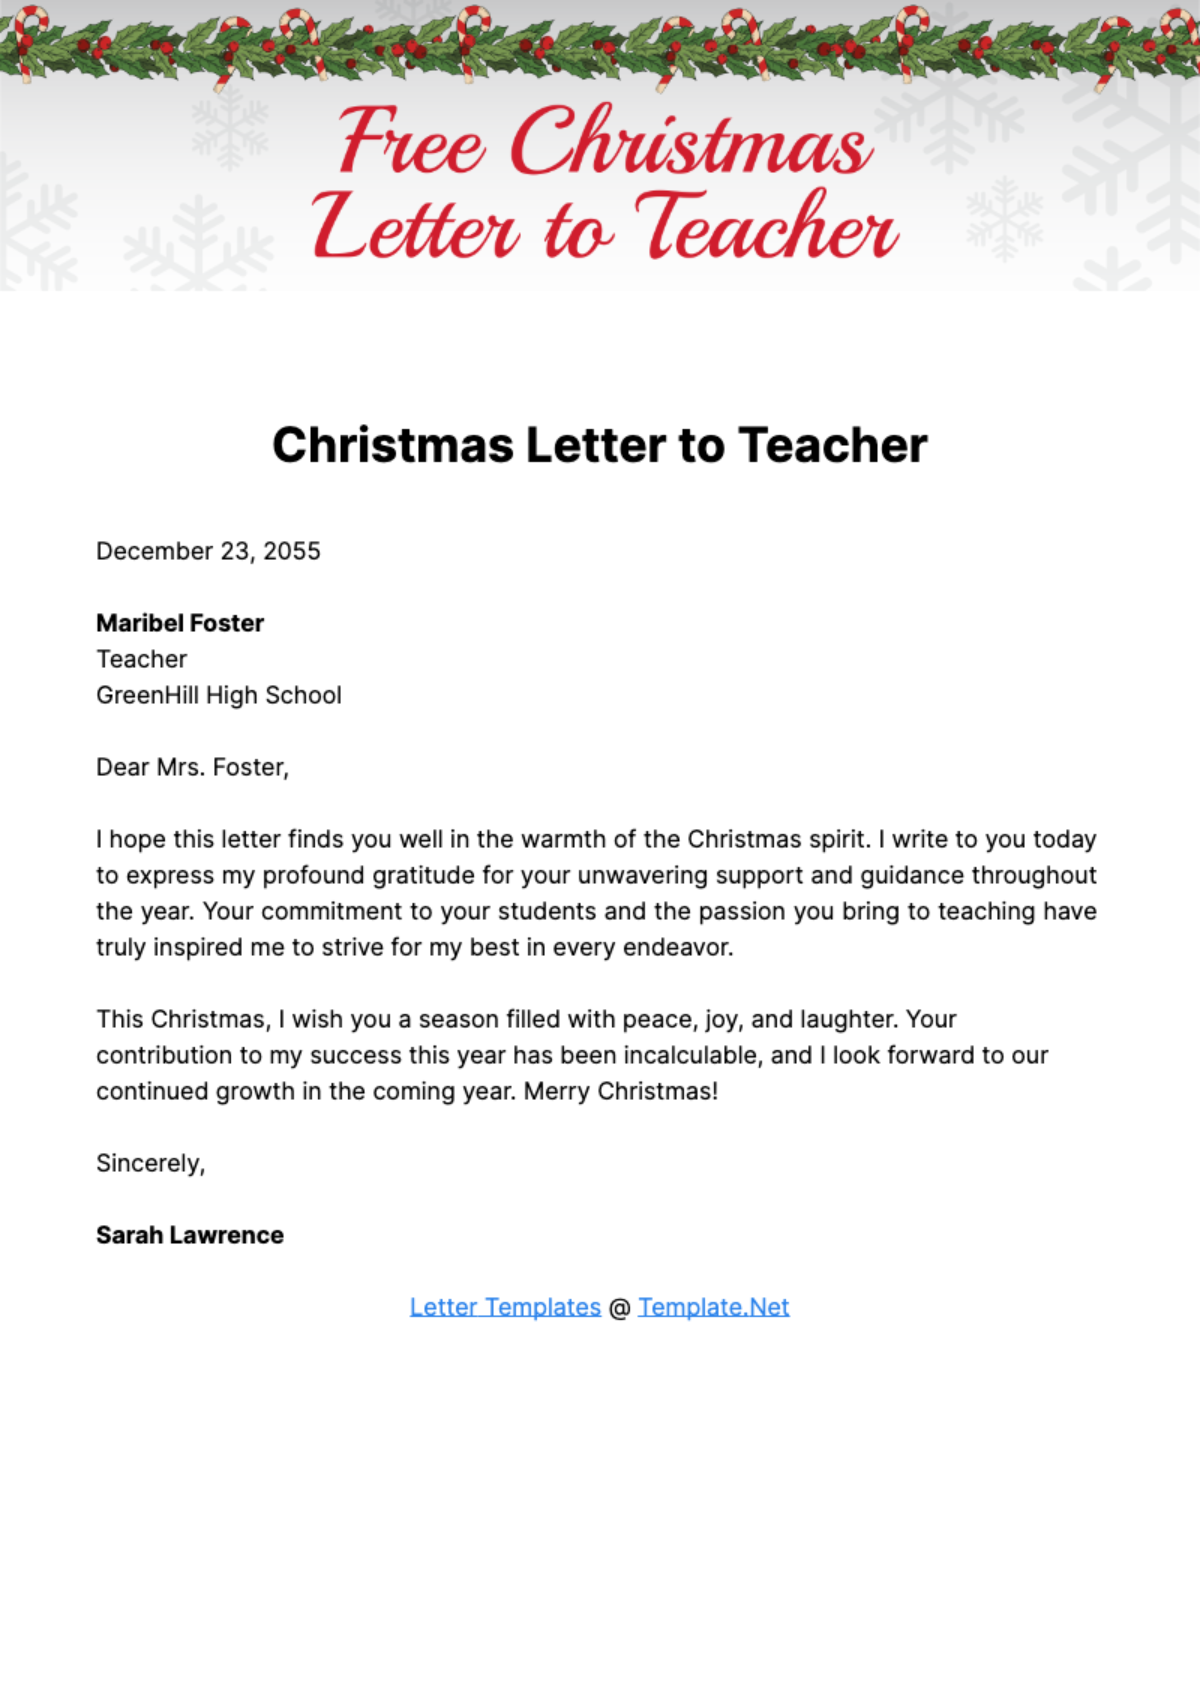 Christmas Letter to Teacher Template